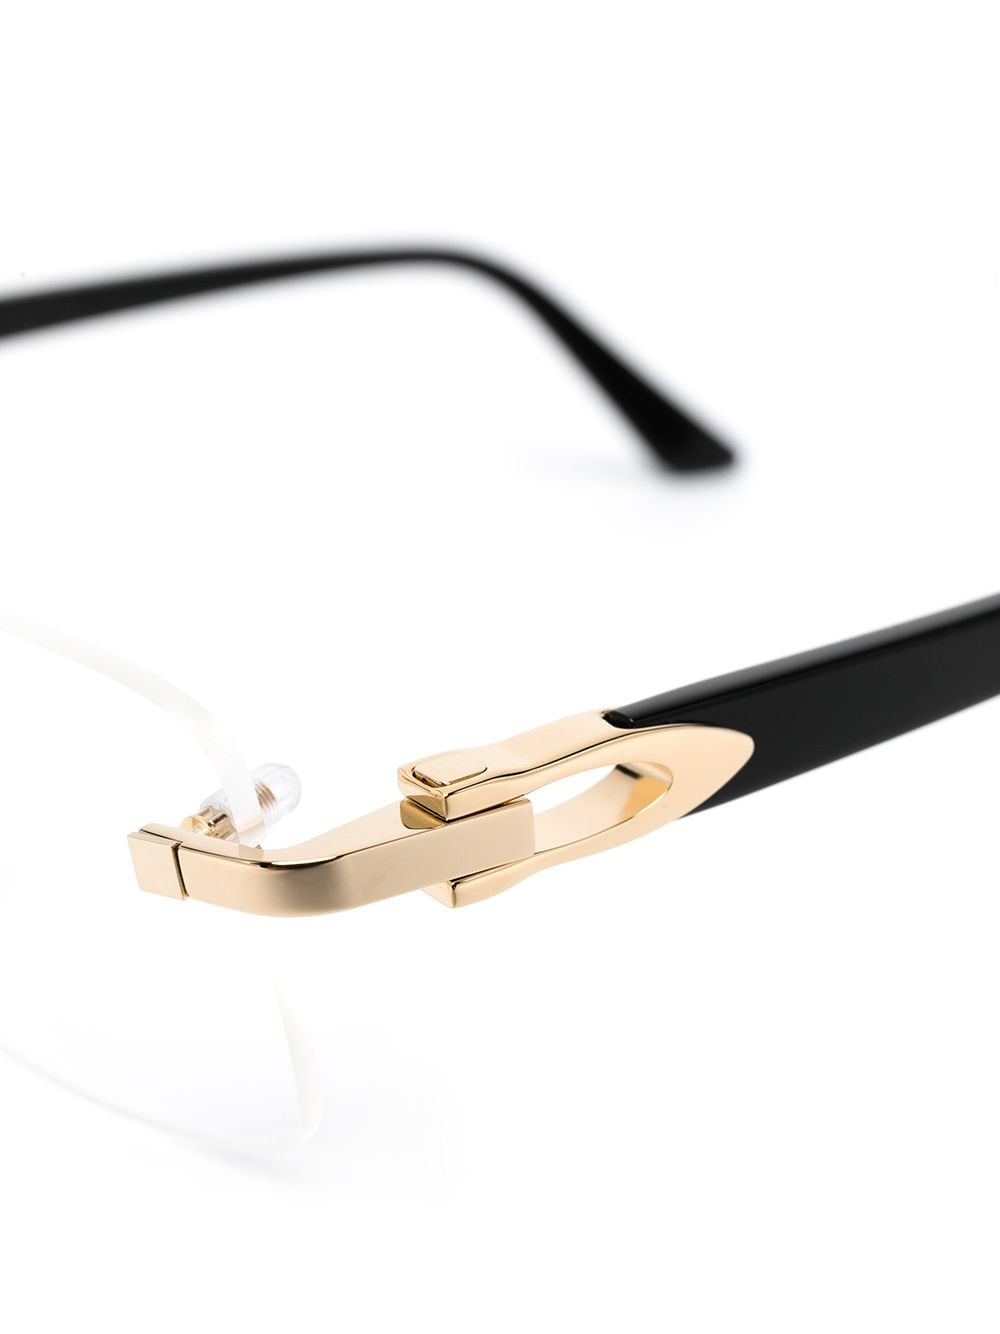 Rectangular Rimless Glasses / Gold and Black